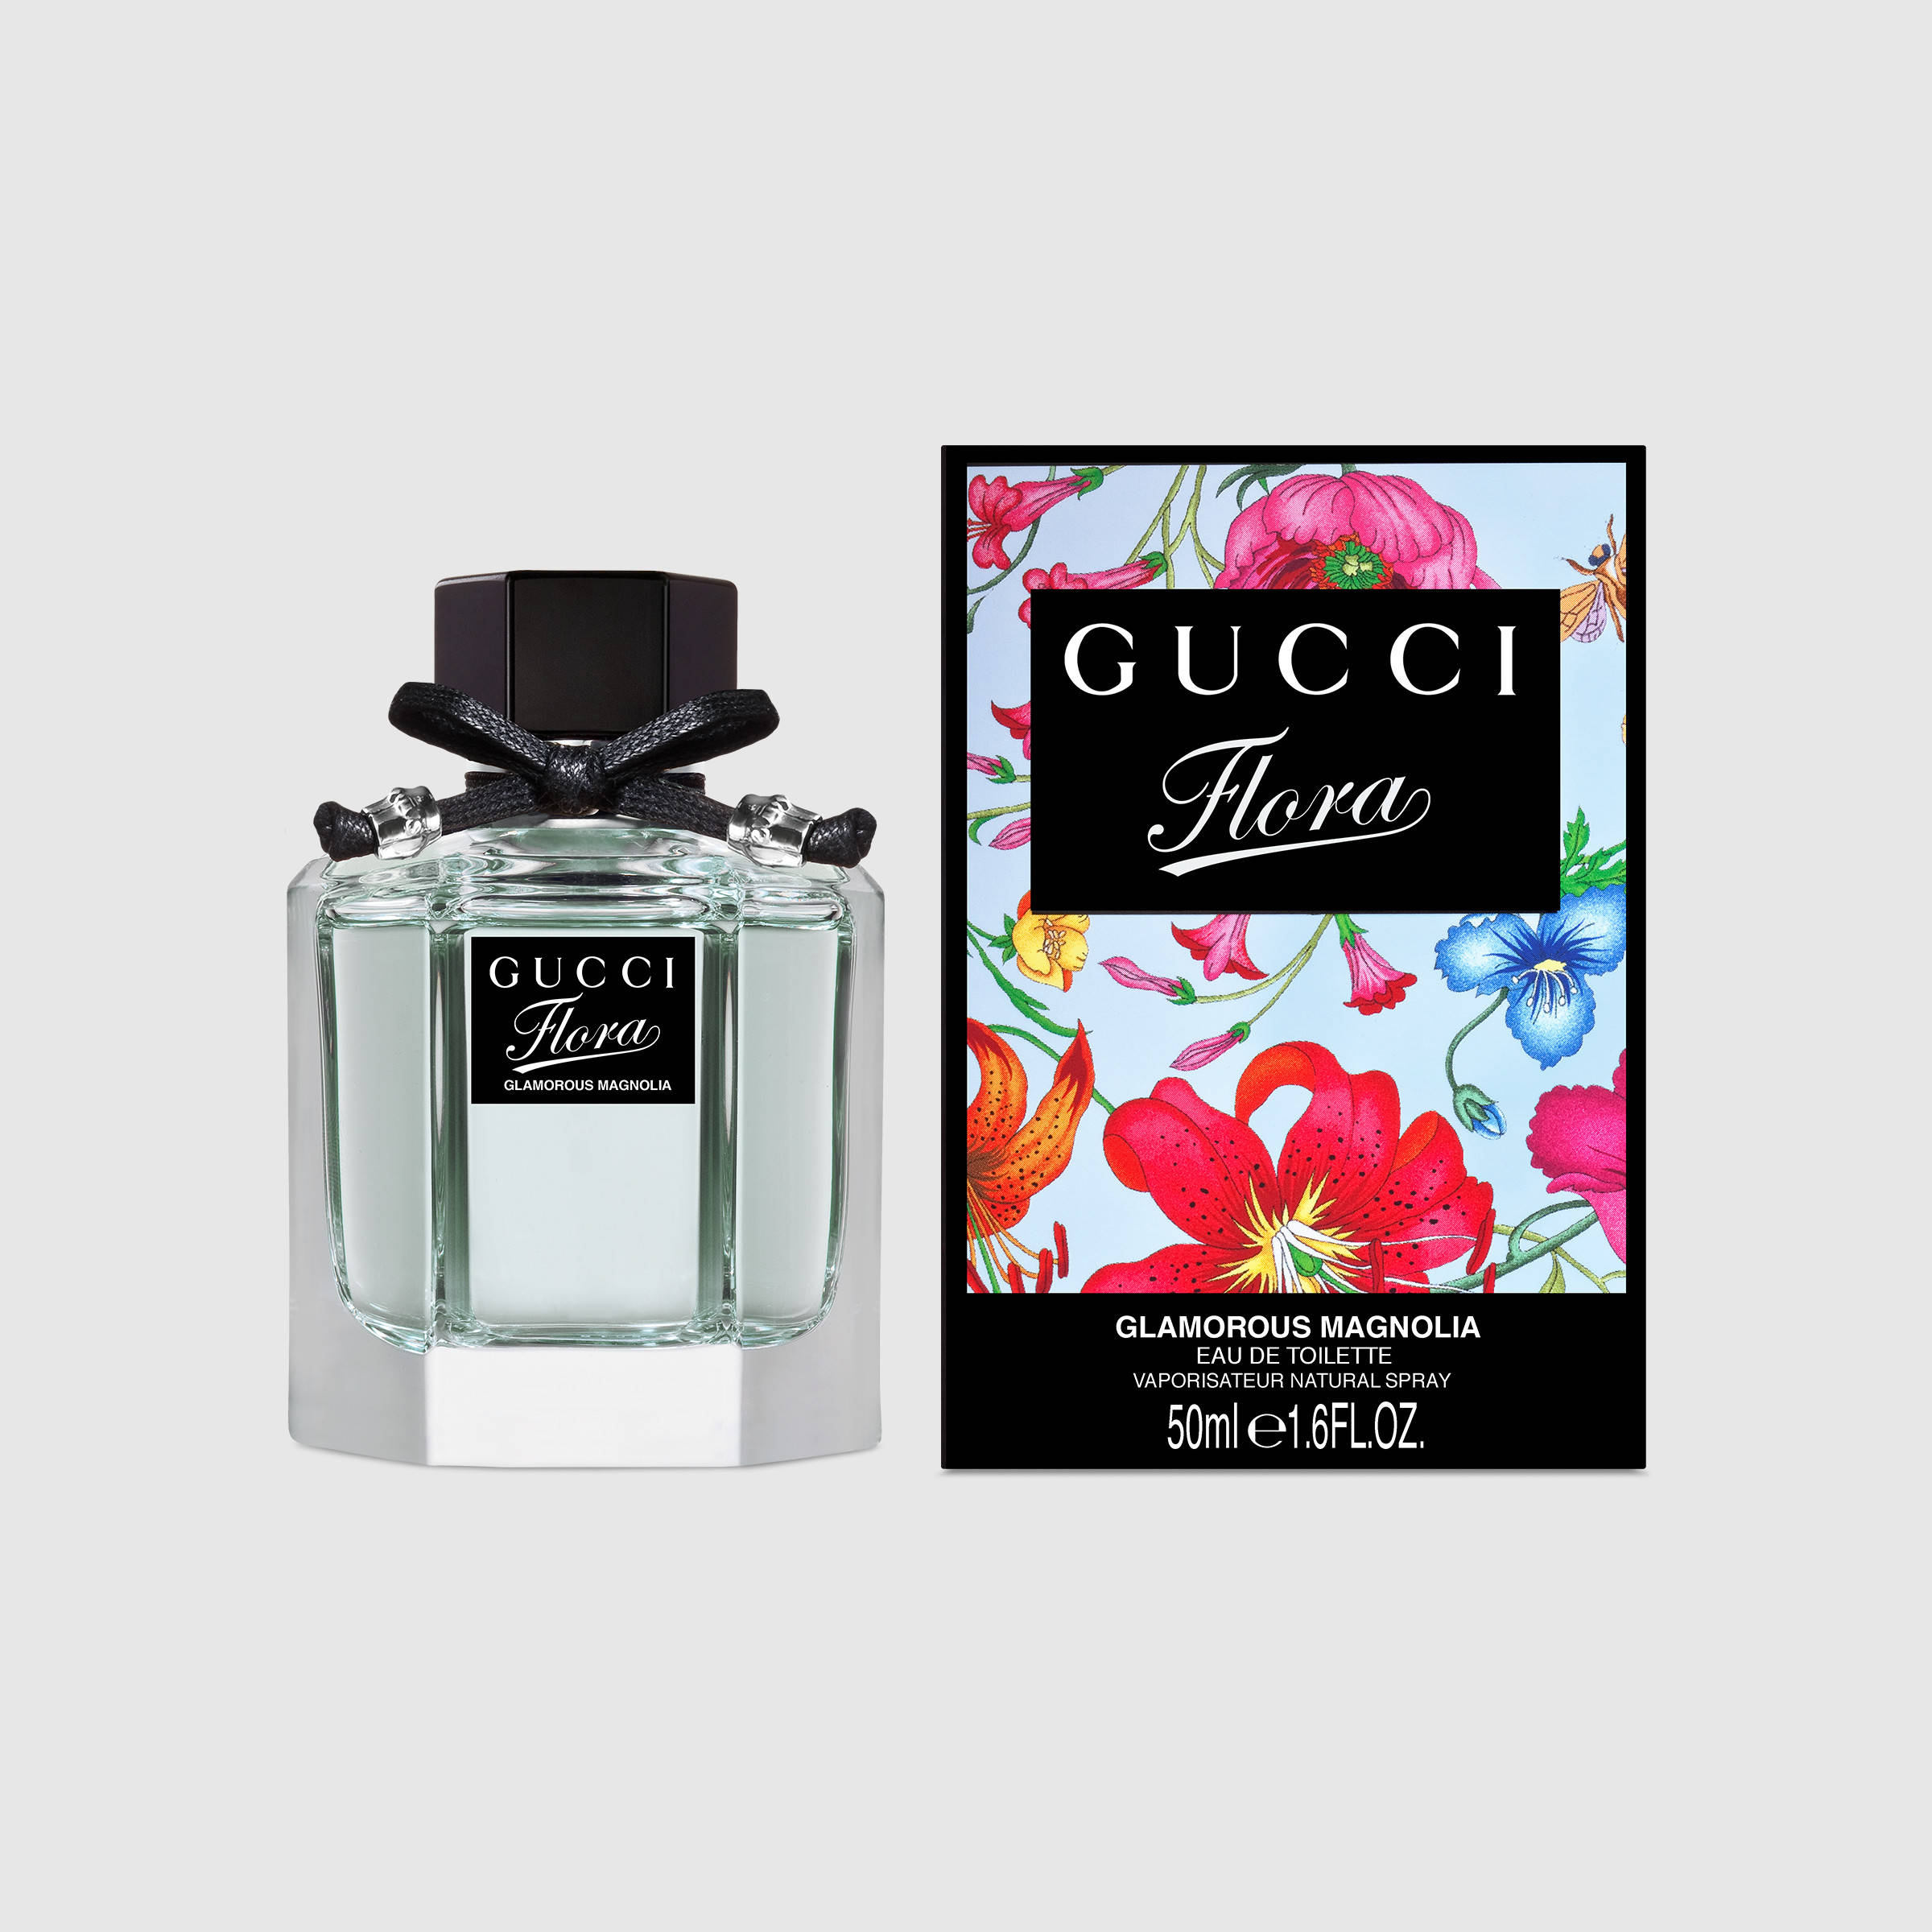 Gucci Flora by Gucci Glamorous Magnolia